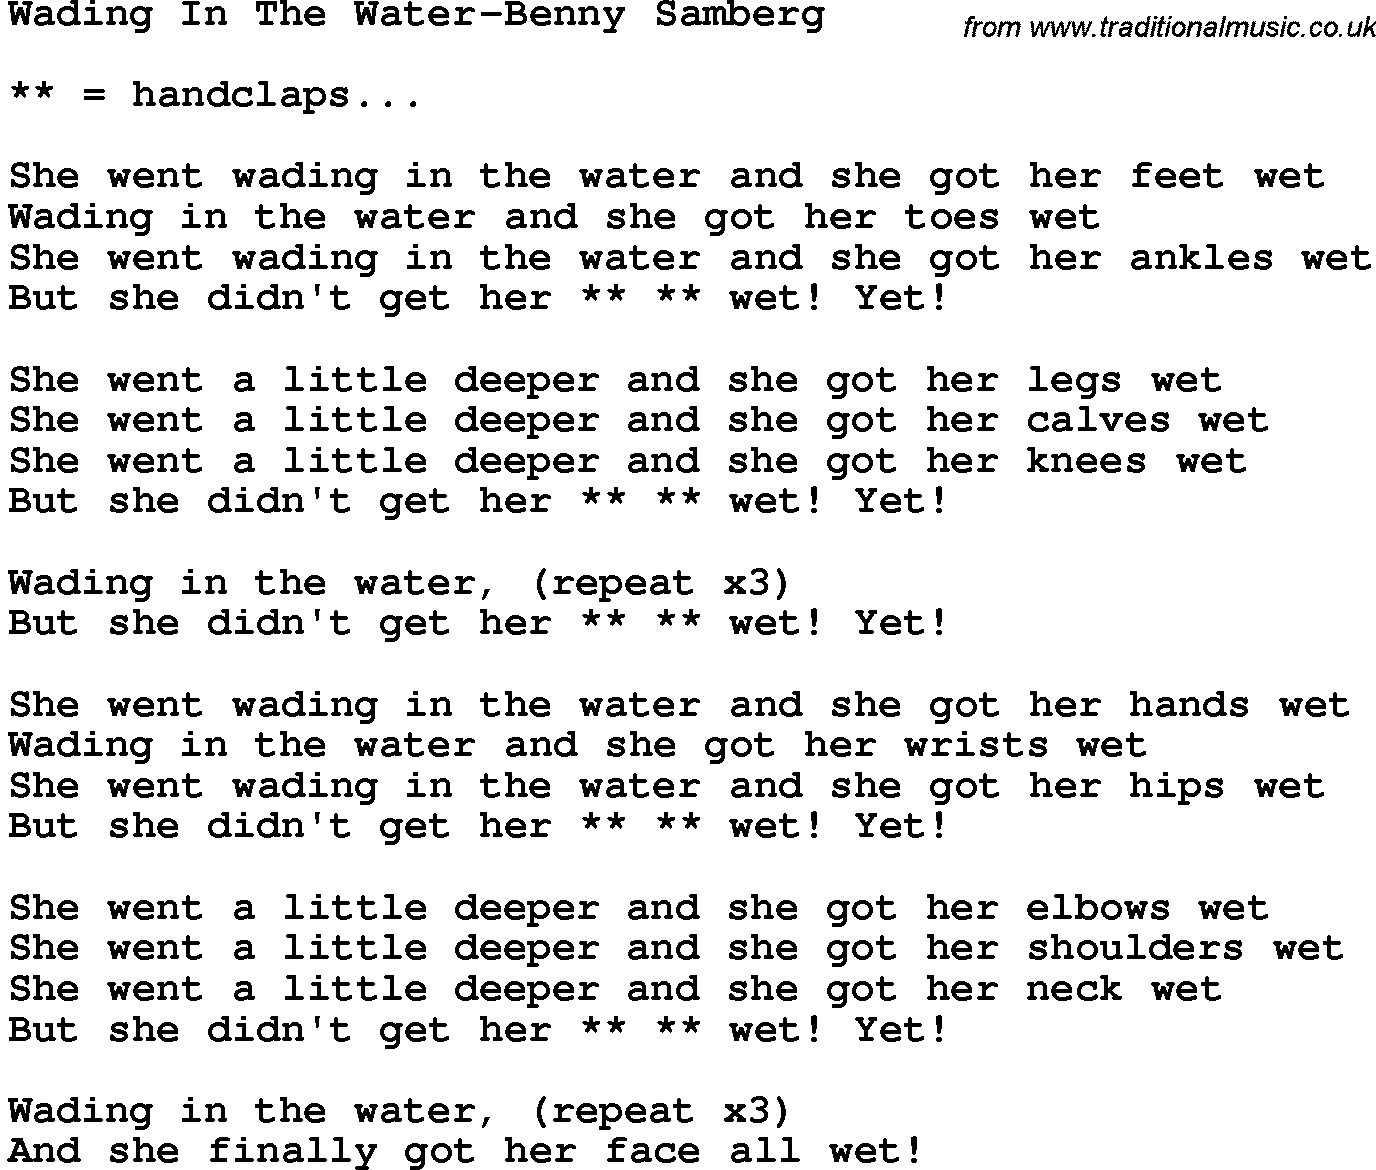 Novelty song: Wading In The Water-Benny Samberg lyrics